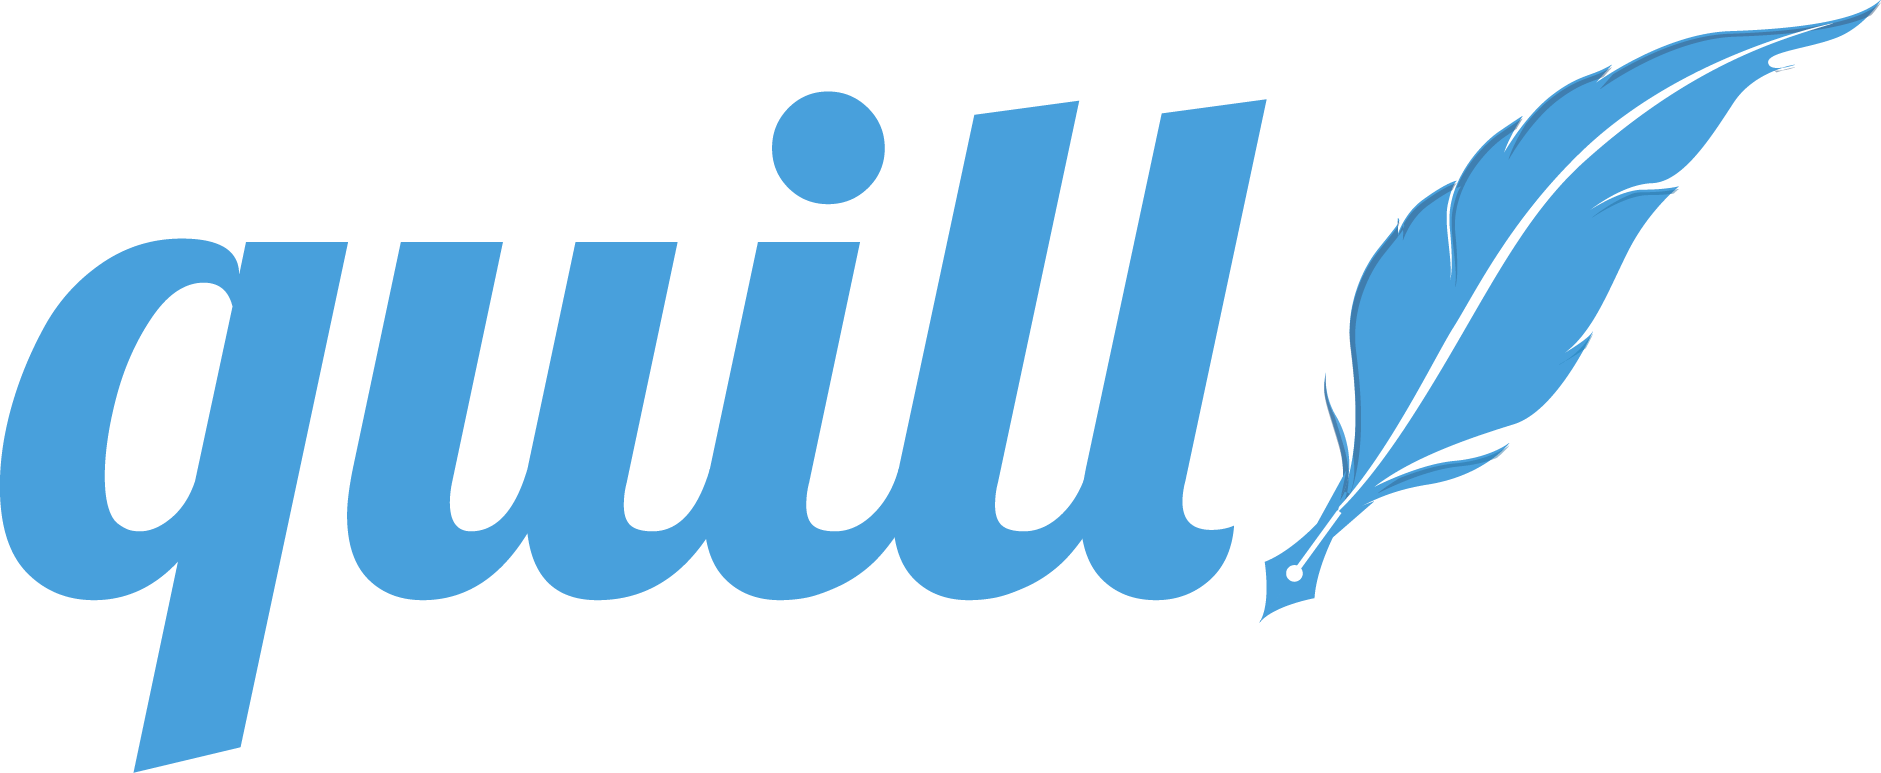 Quill.com Logo - Quill